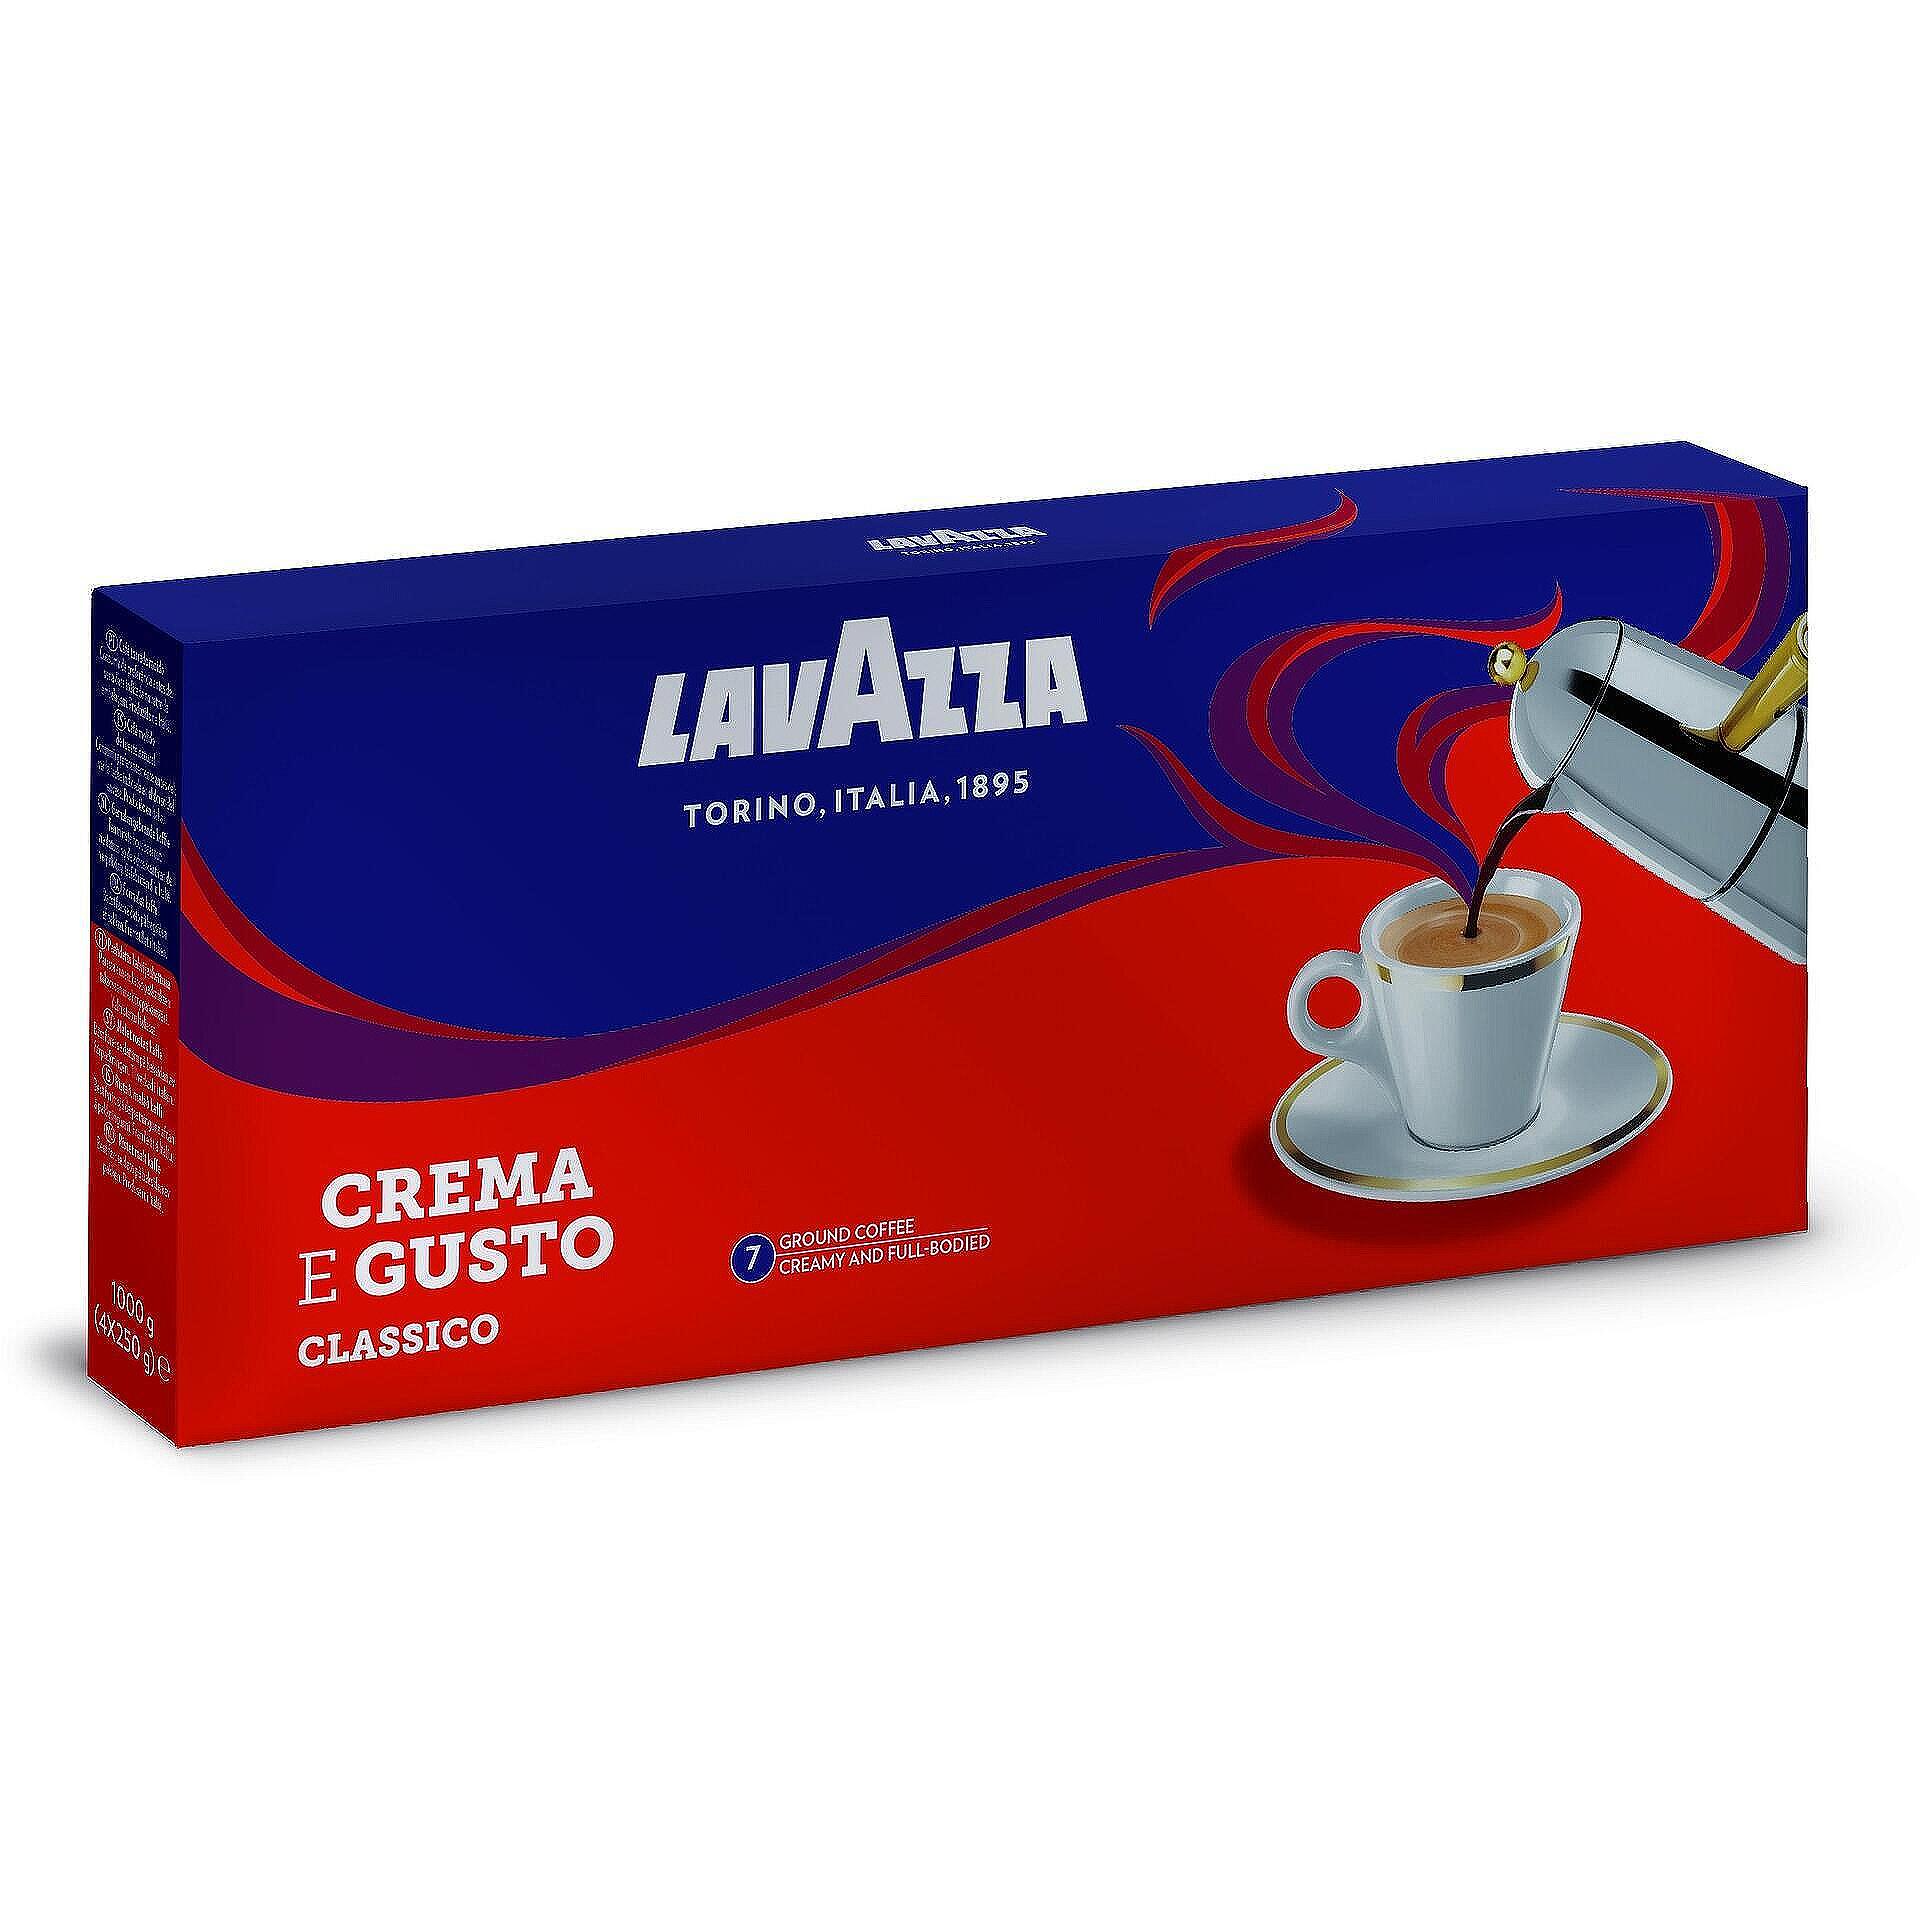 Lavazza Crema e Gusto мляно кафе, 4 бр. | 1 кг